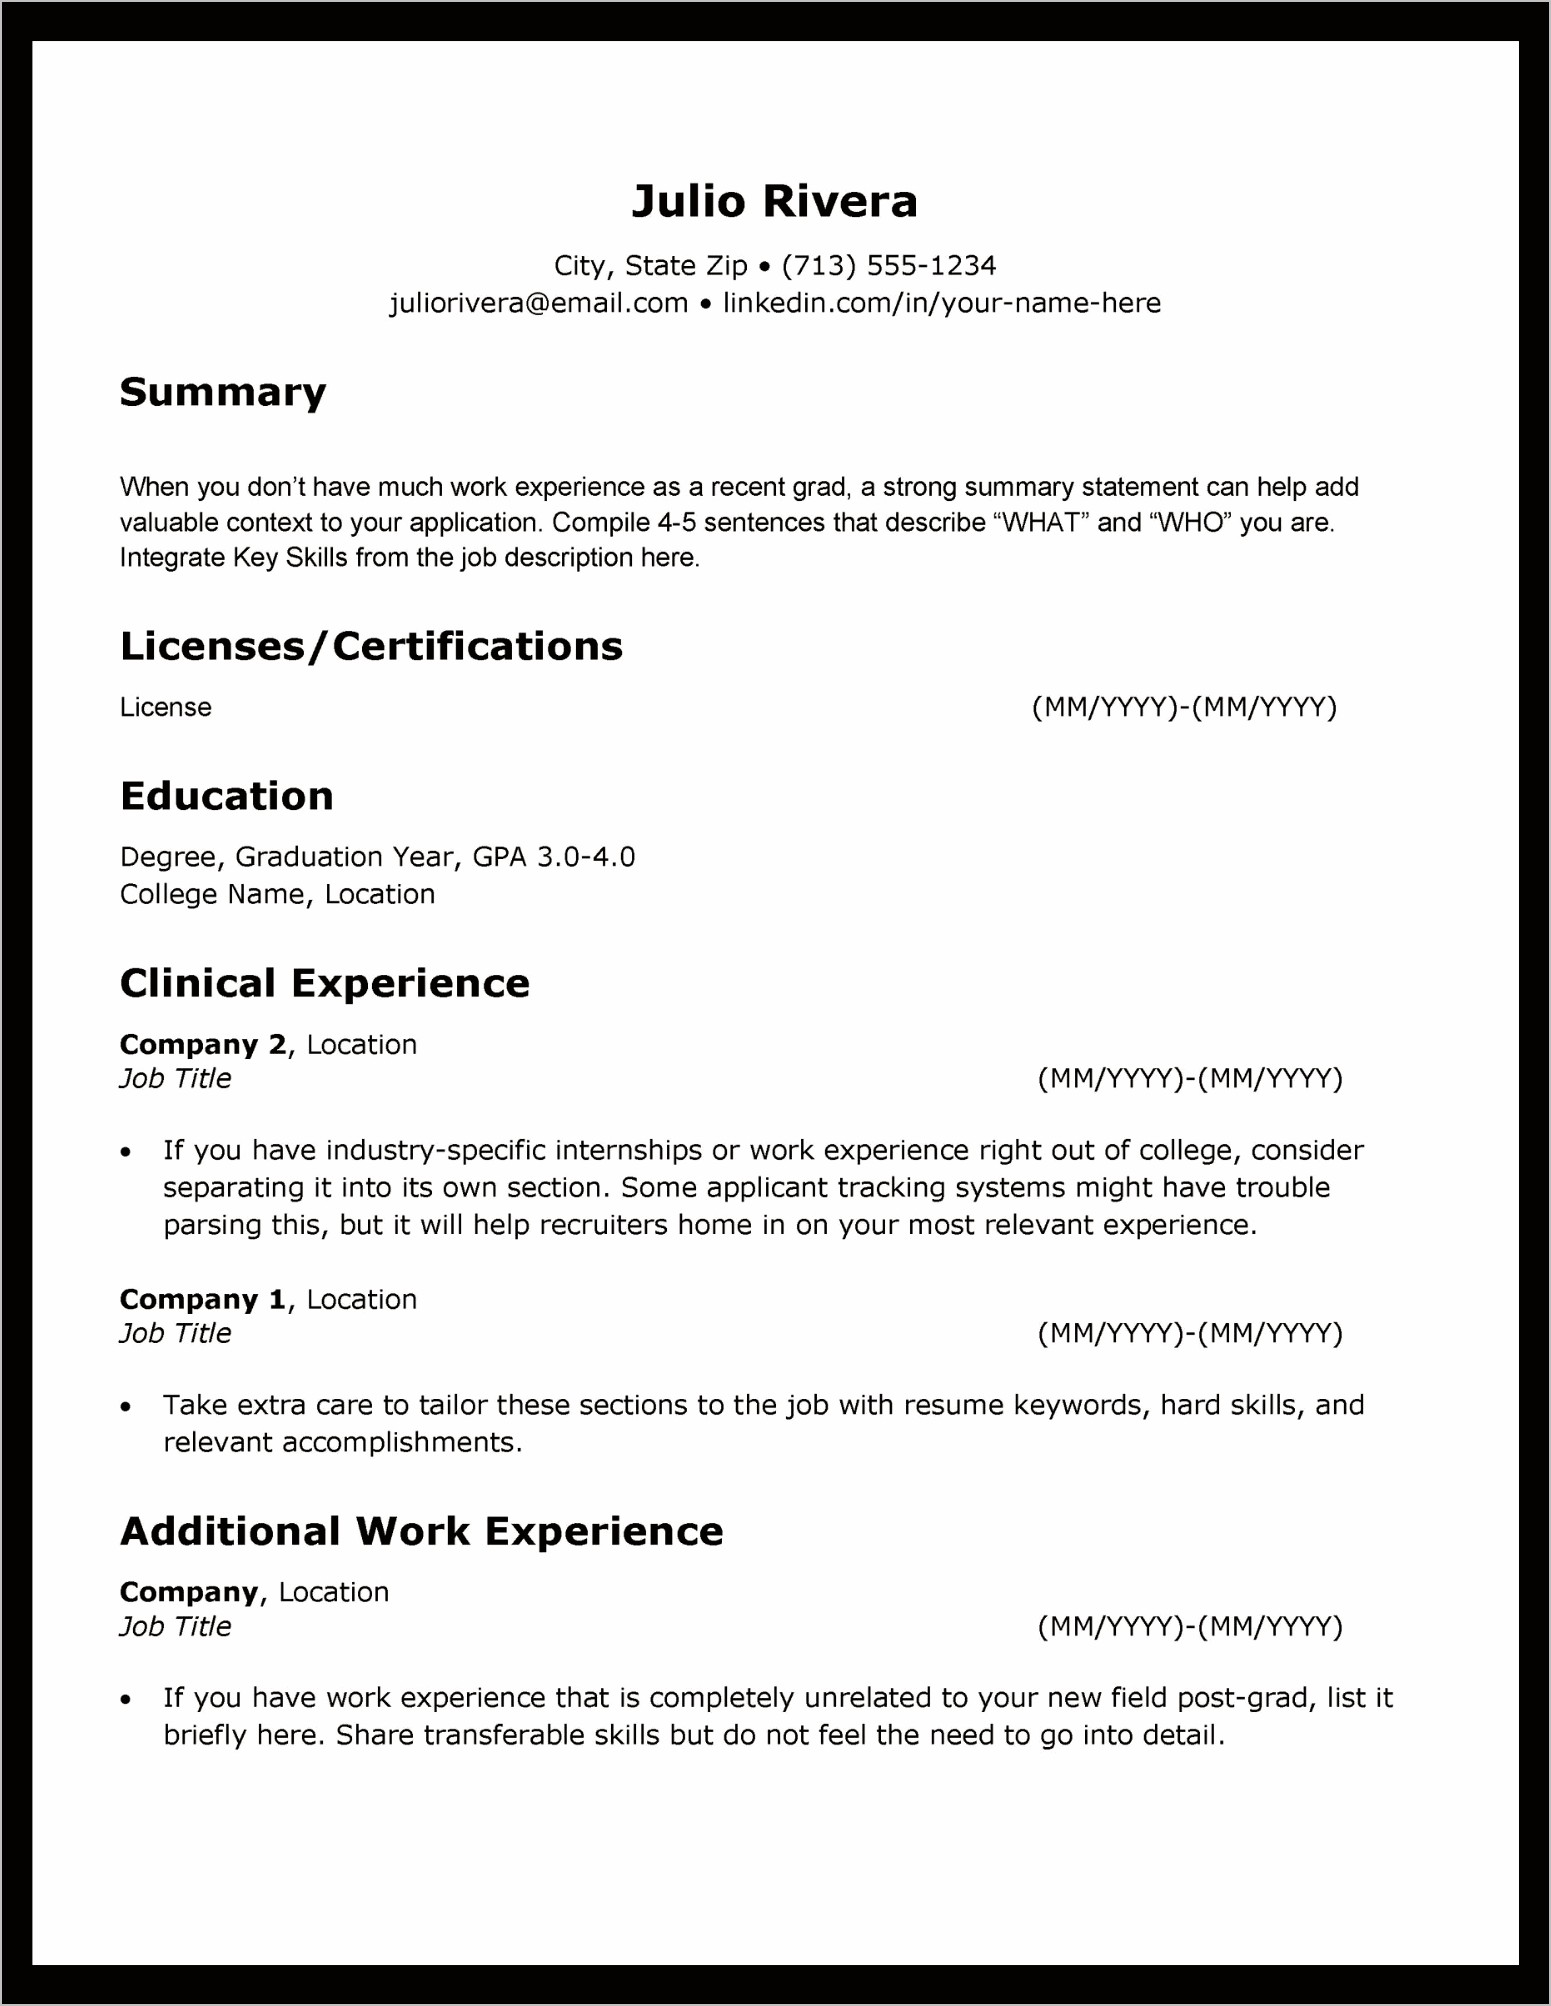 Resume For Job After Graduation